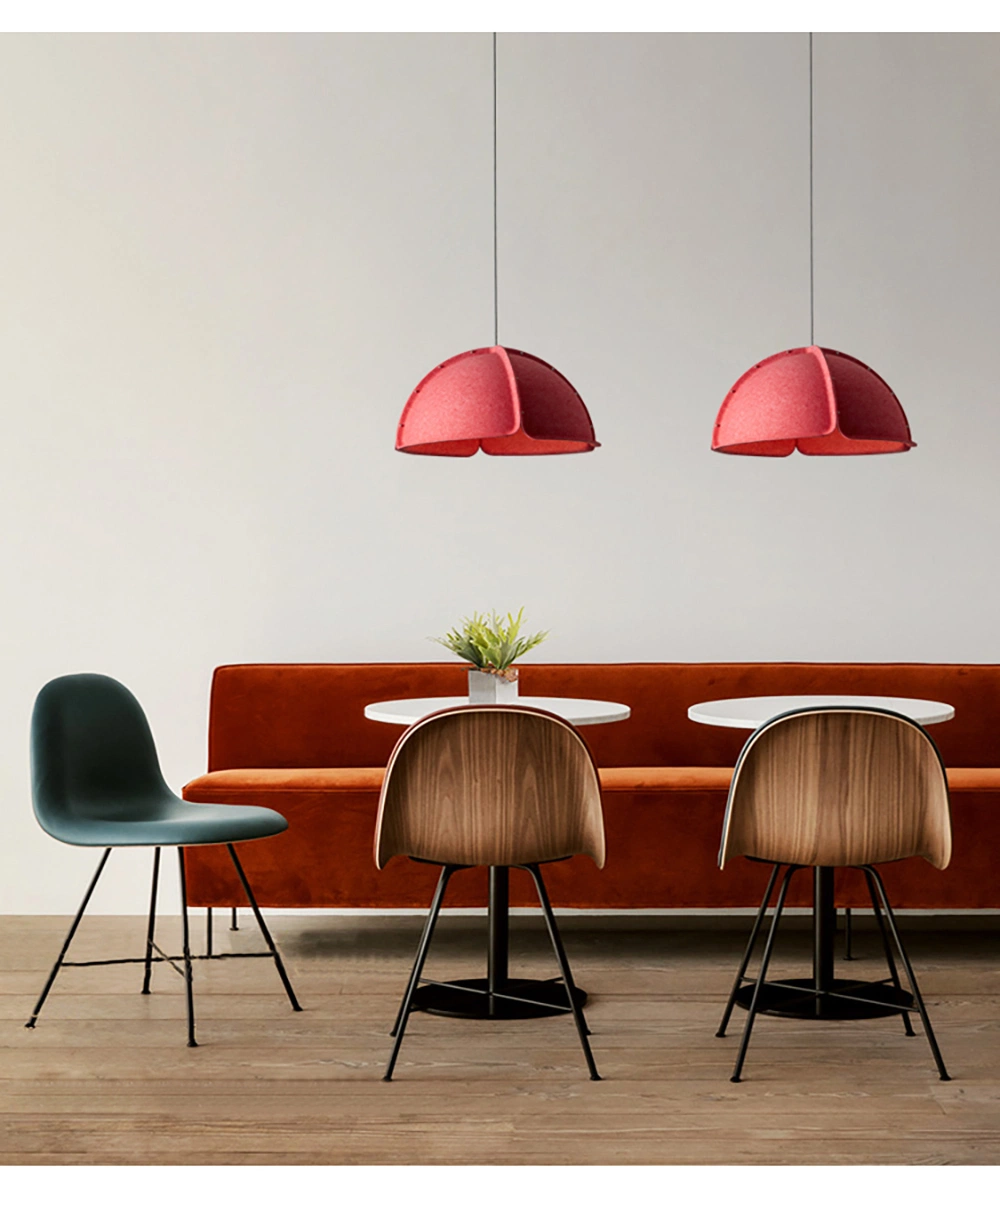 Molded Pet Felt Luxury Office or Restaurant Ceiling Lamp Chandelier Lighting in Scandinavian Design